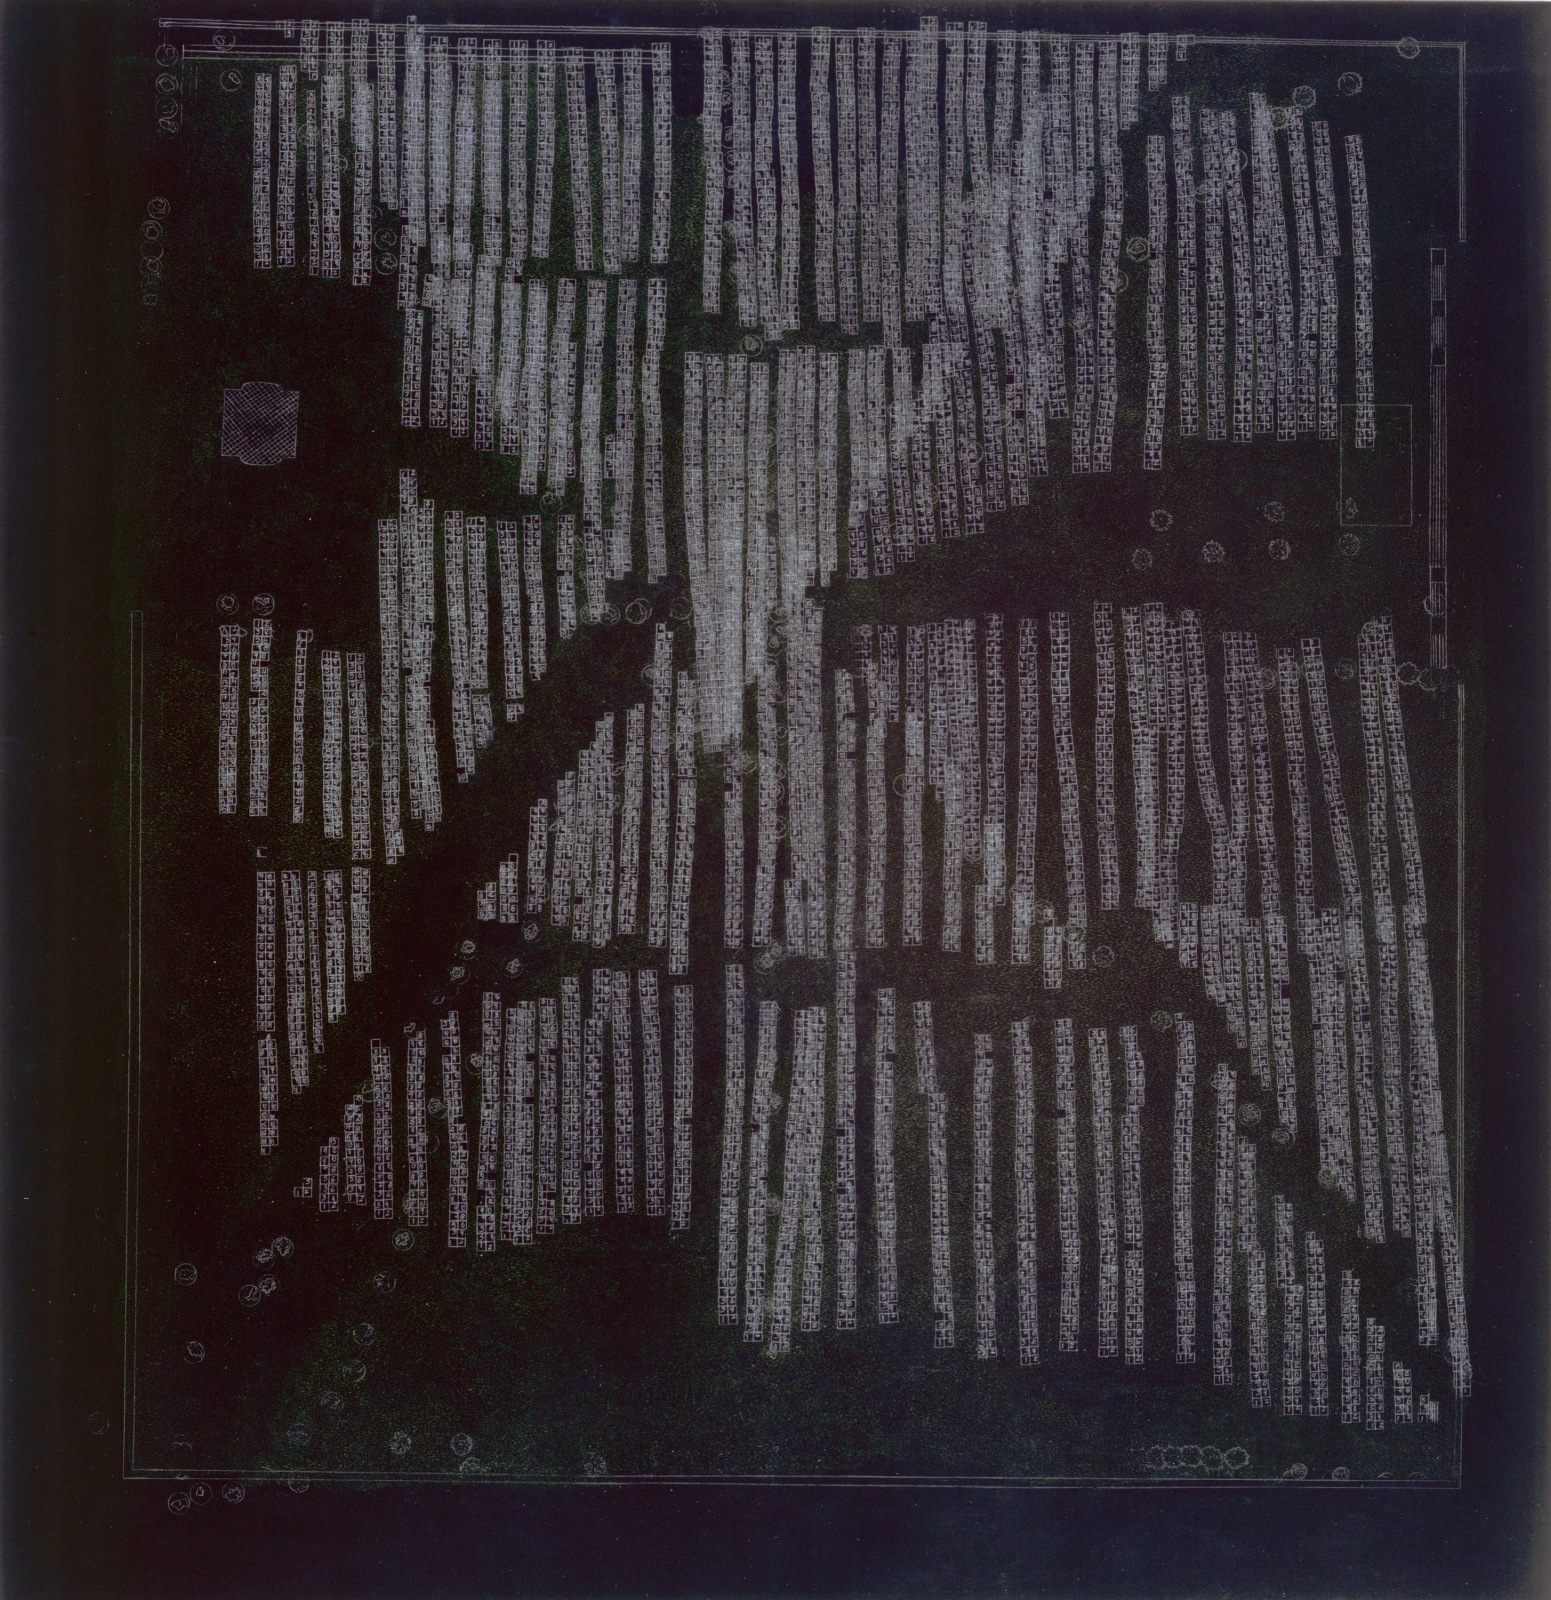 GUILLERMO KUITCA, Untitled, 1996